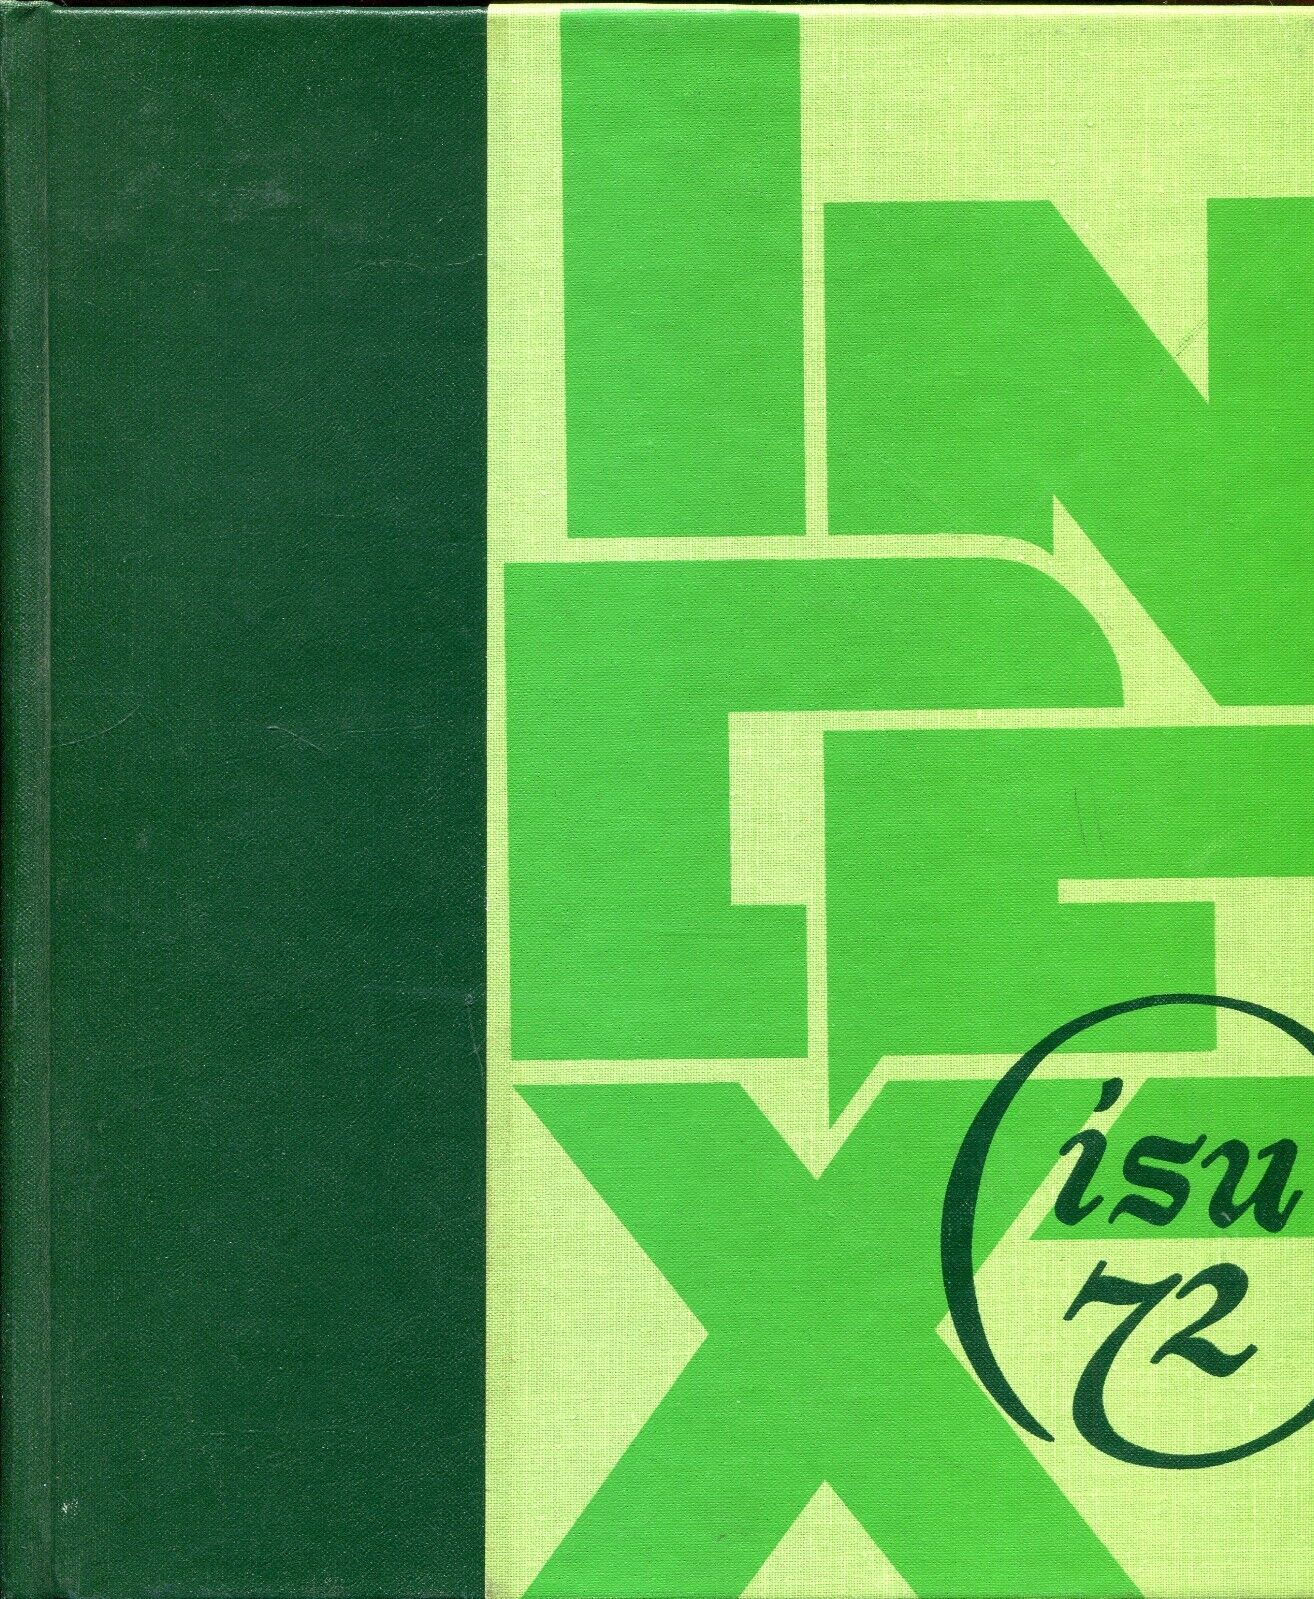 ILLINOIS STATE UNIVERSITY, NORMAL, ILLINOIS YEARBOOK - INDEX - 1972